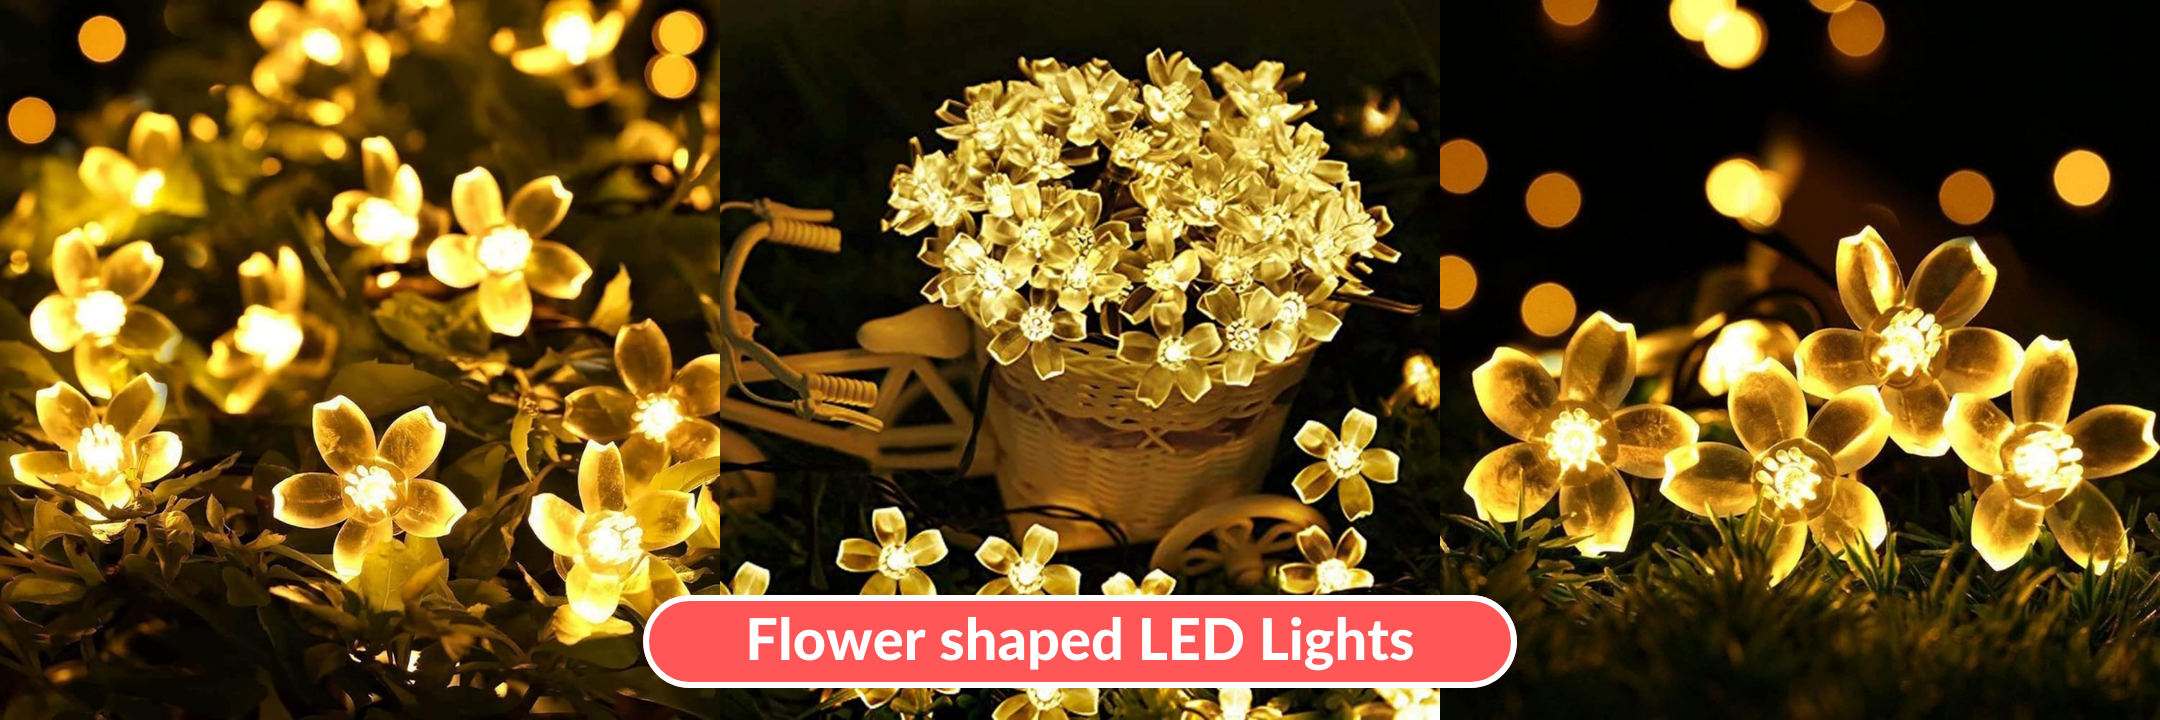 Flower shaped LED Lights for Diwali Decoration- Apollo Universe